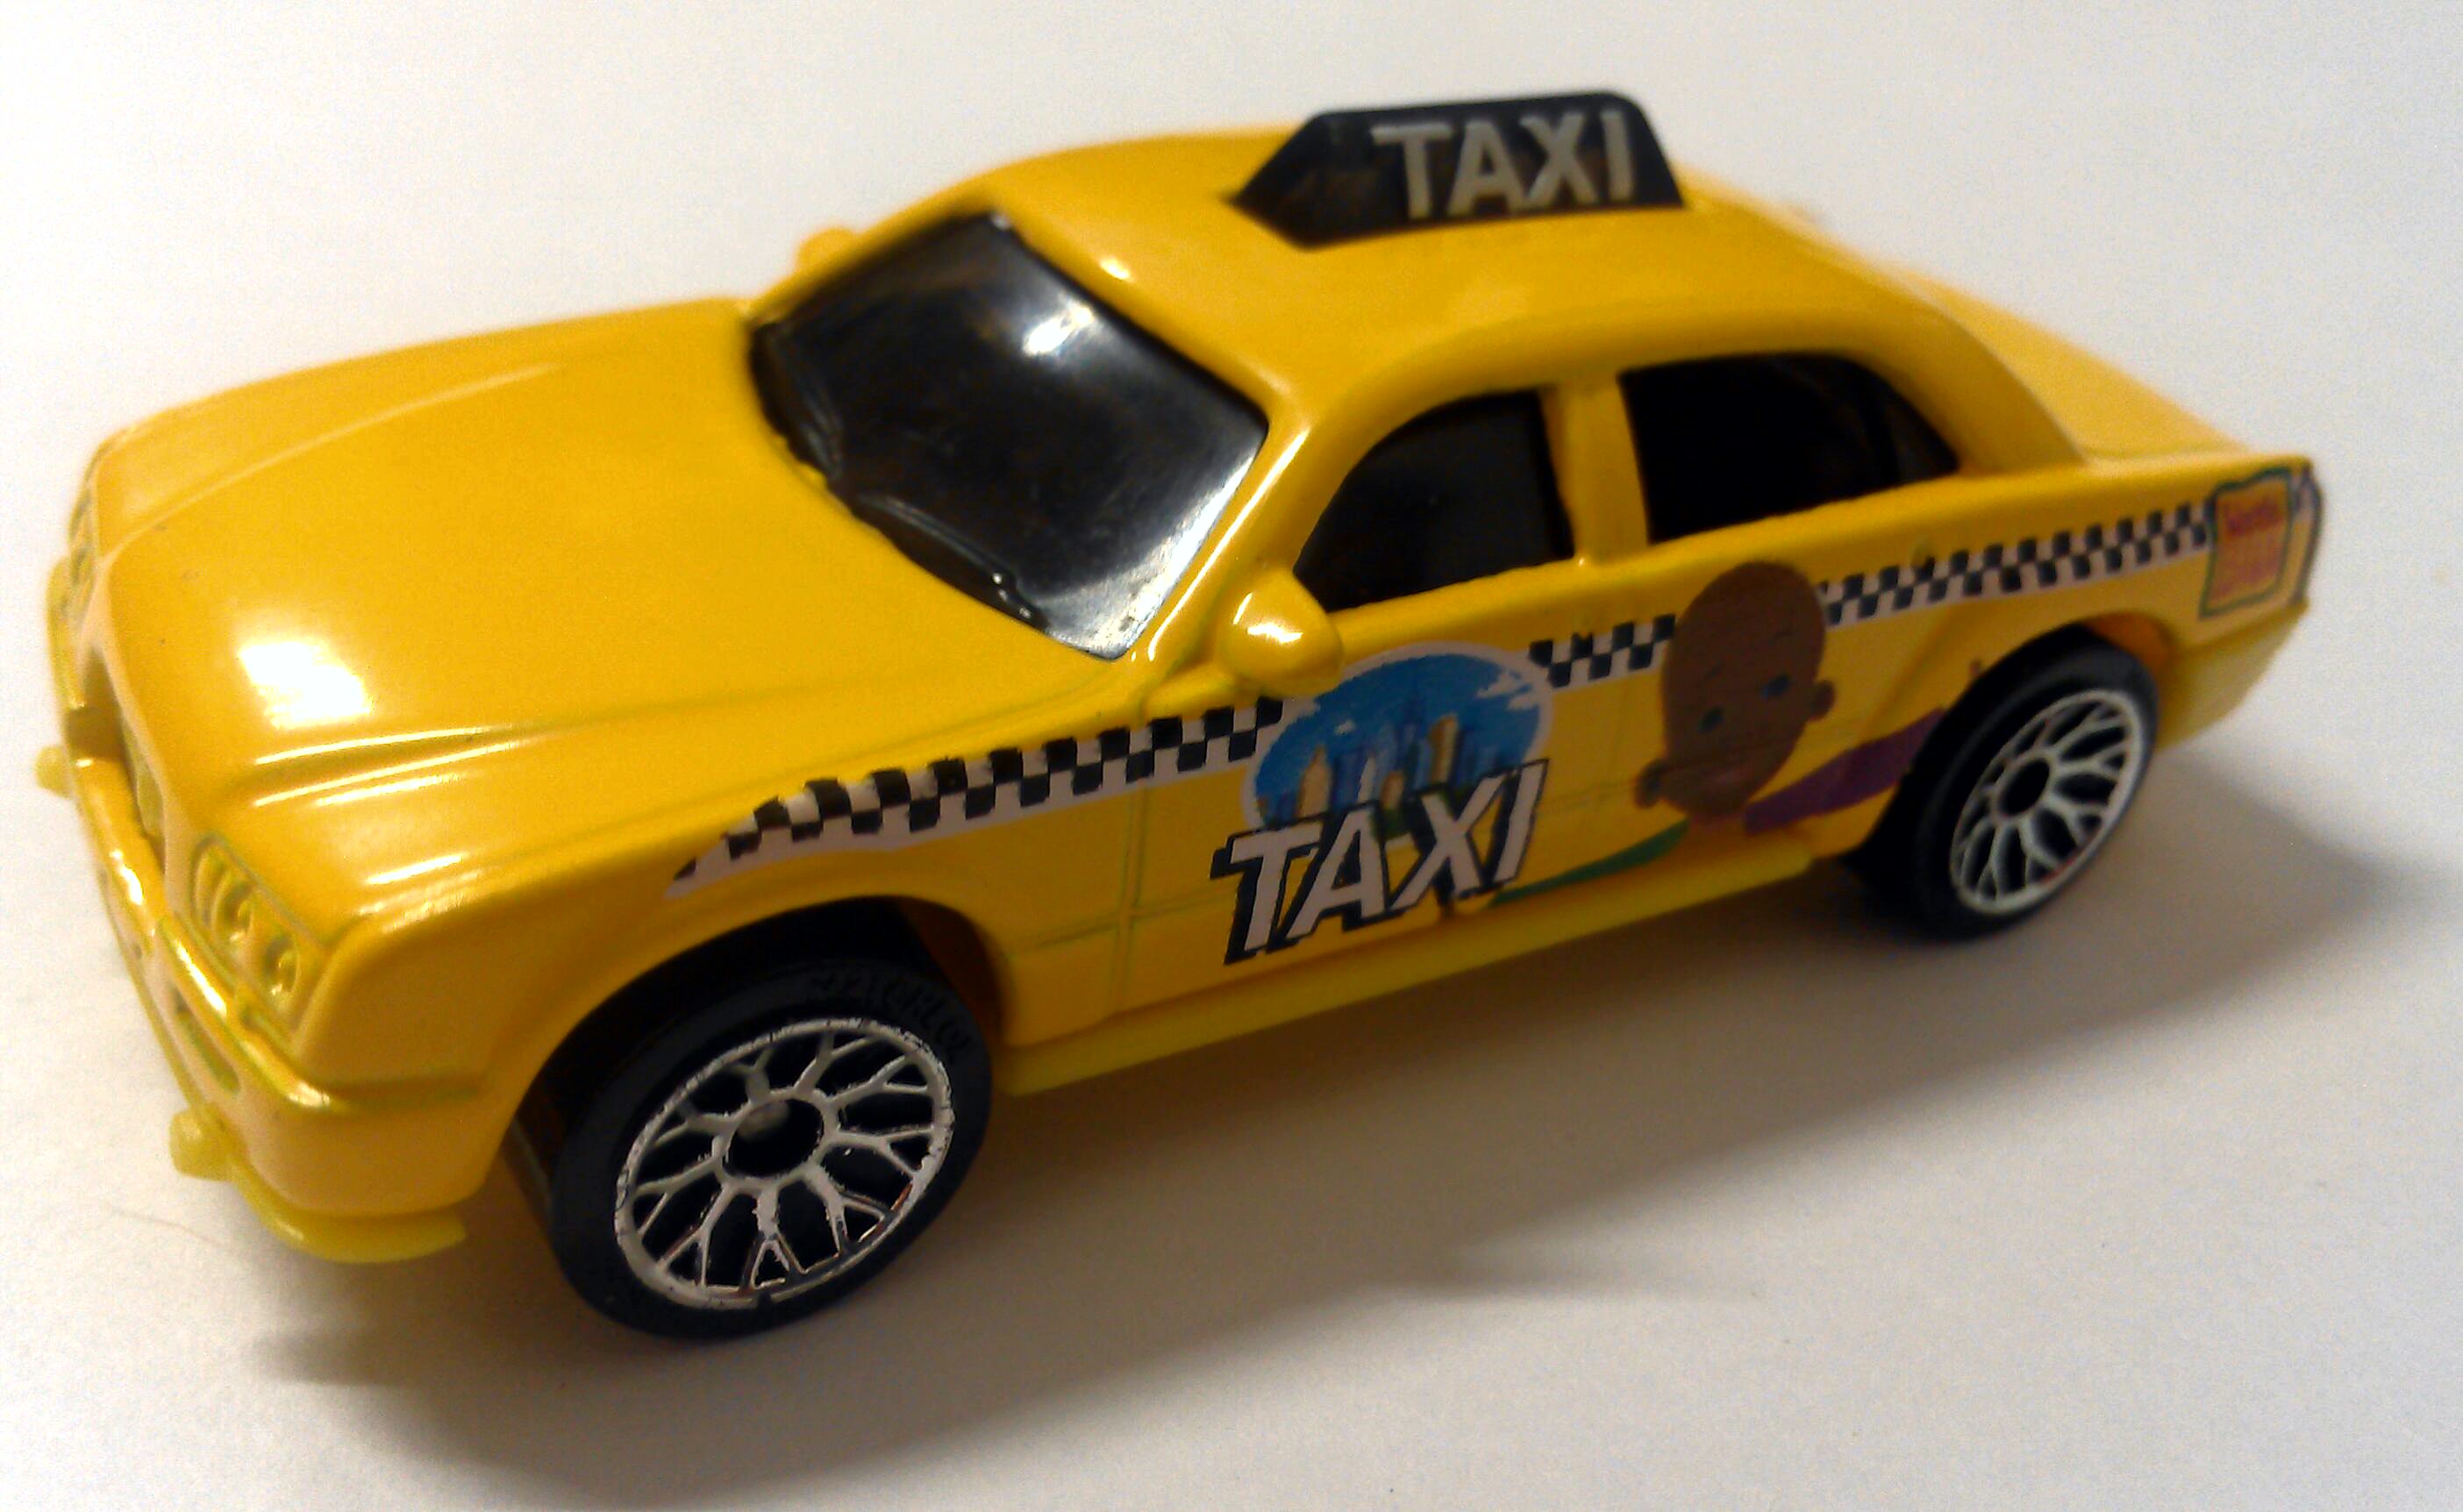 Taxi Cab - Matchbox Cars Wiki